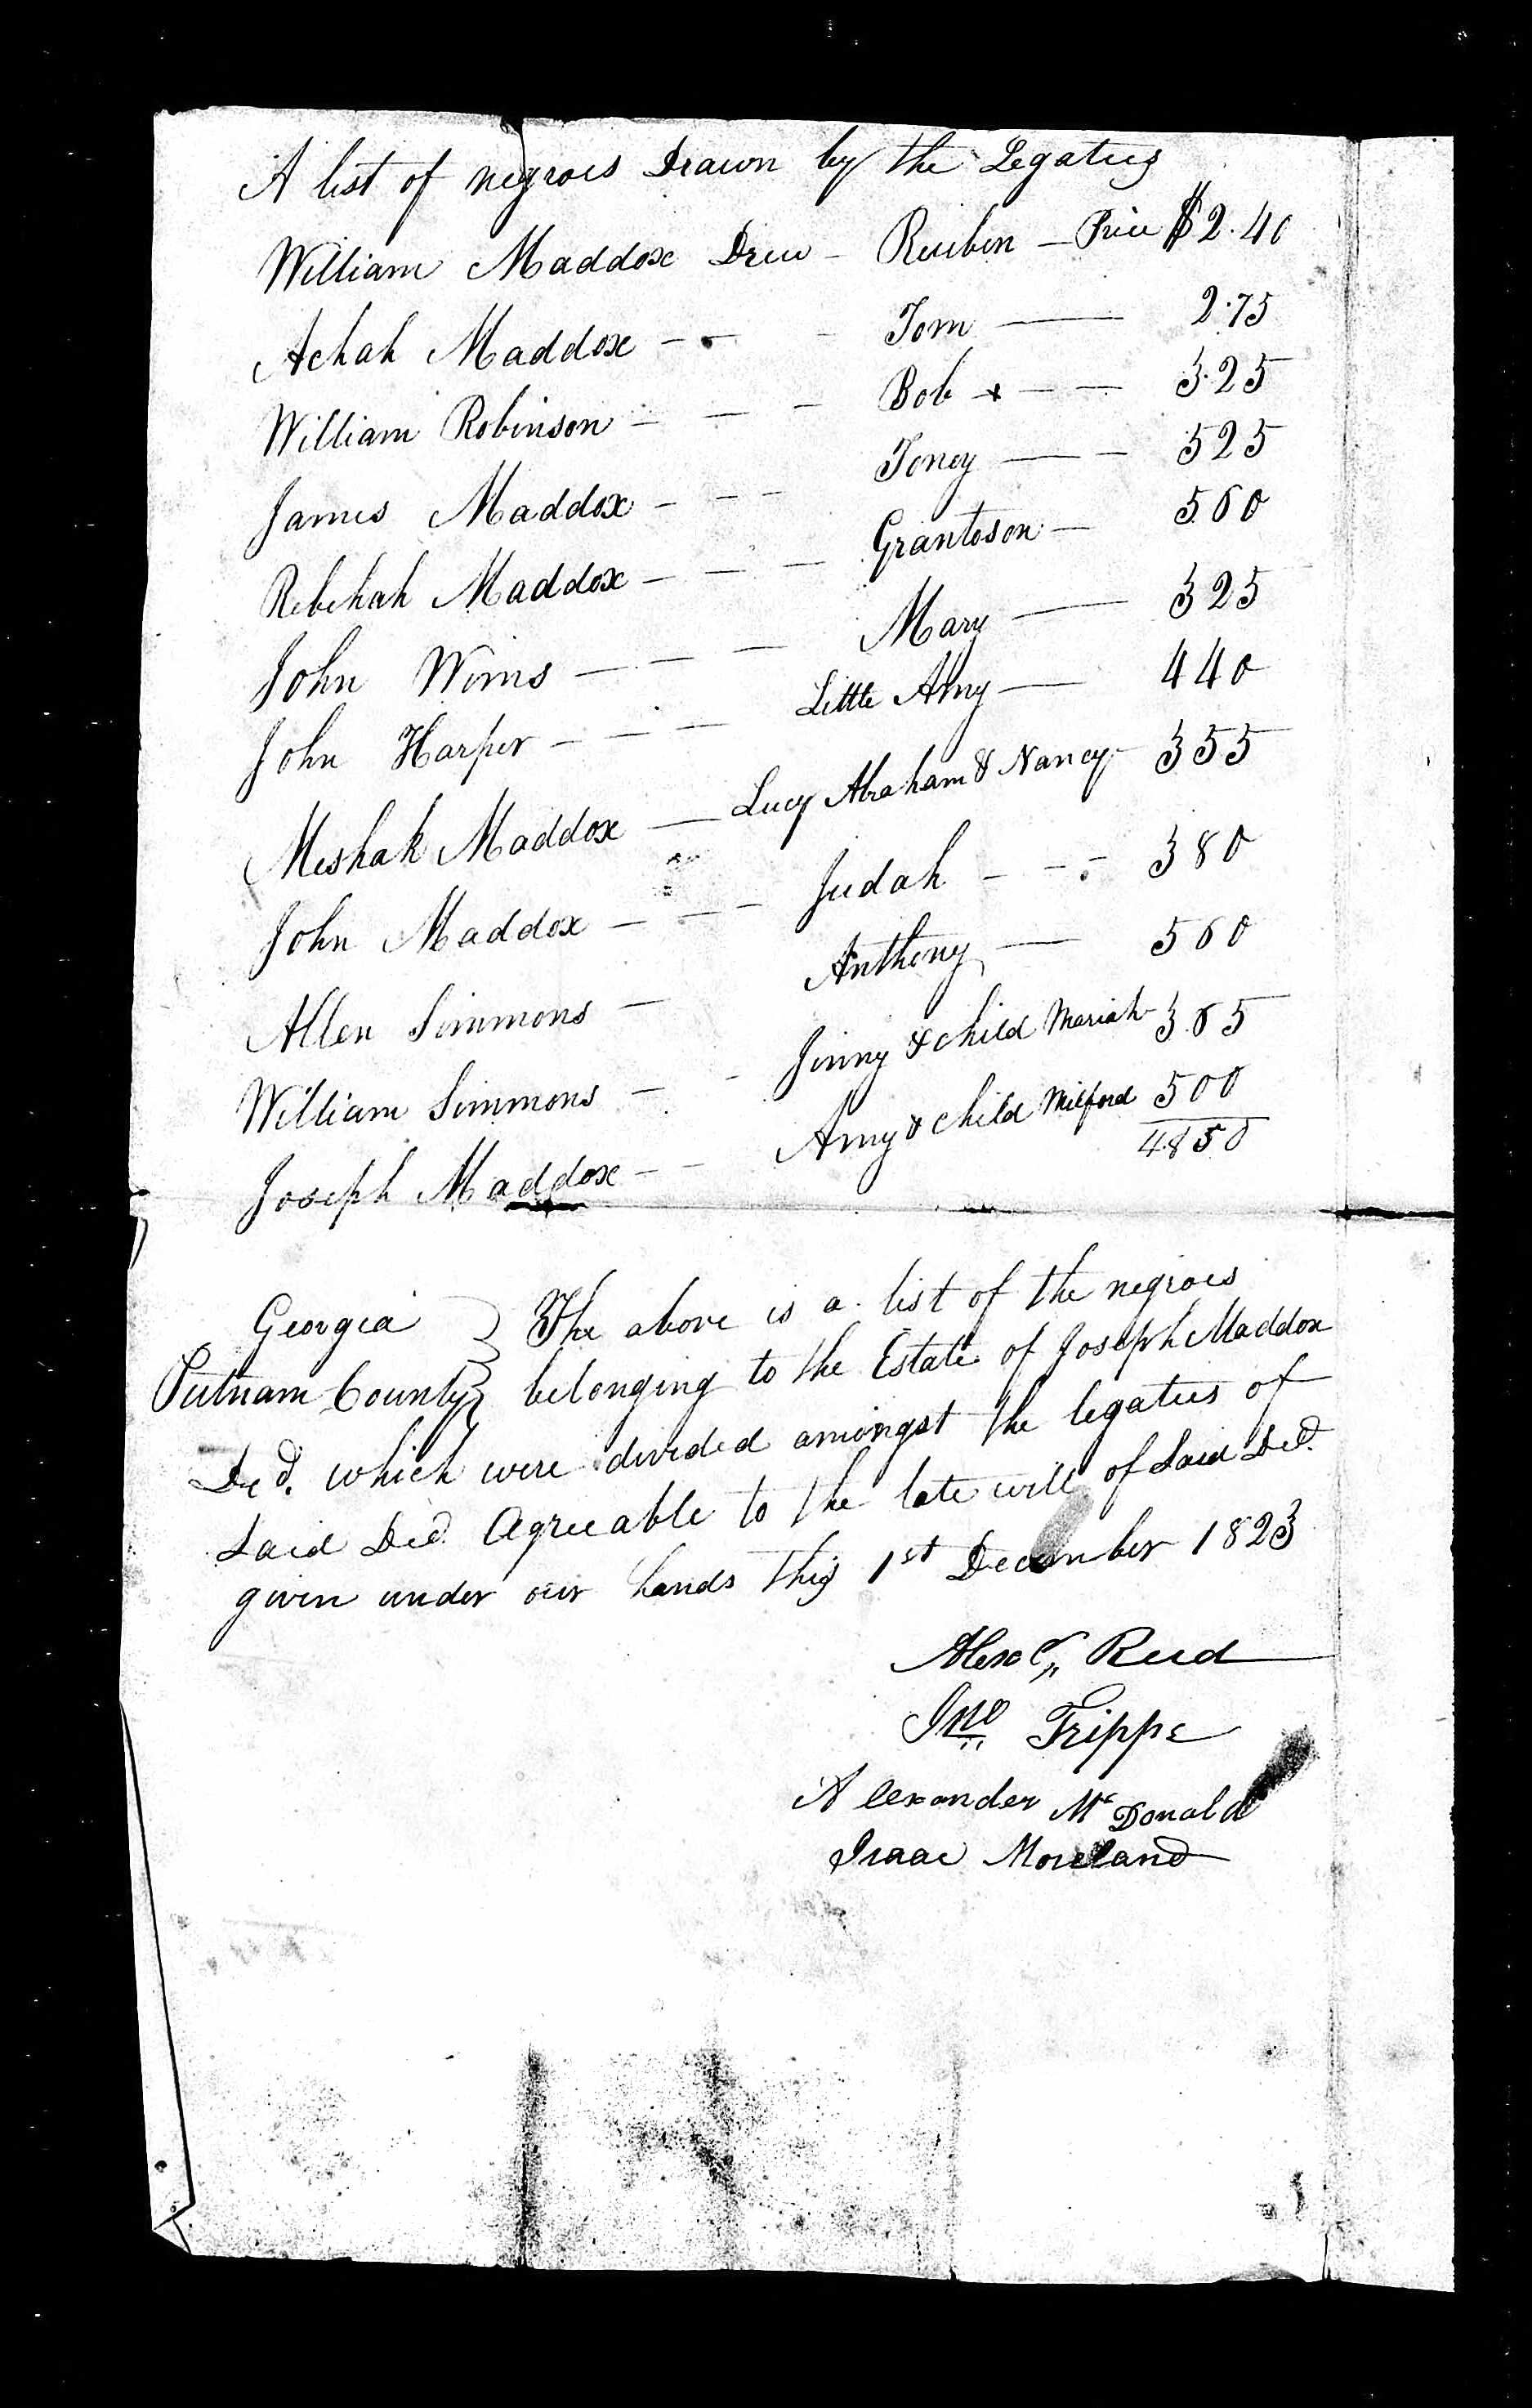 1823 distribution of slaves - Joseph Maddox